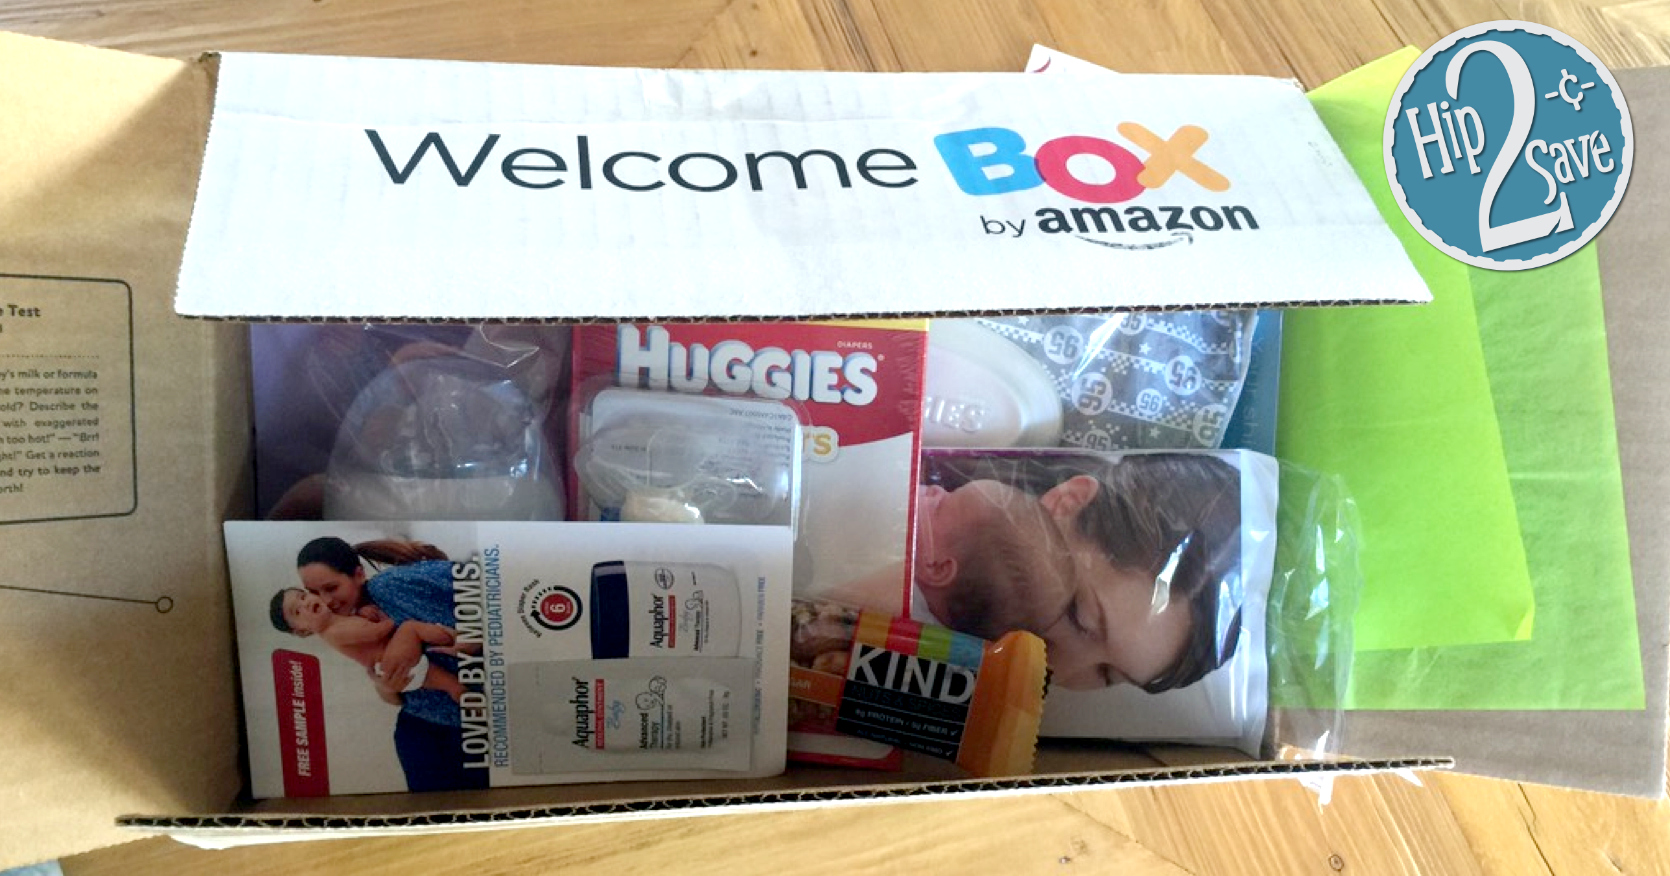 amazon prime free baby welcome box